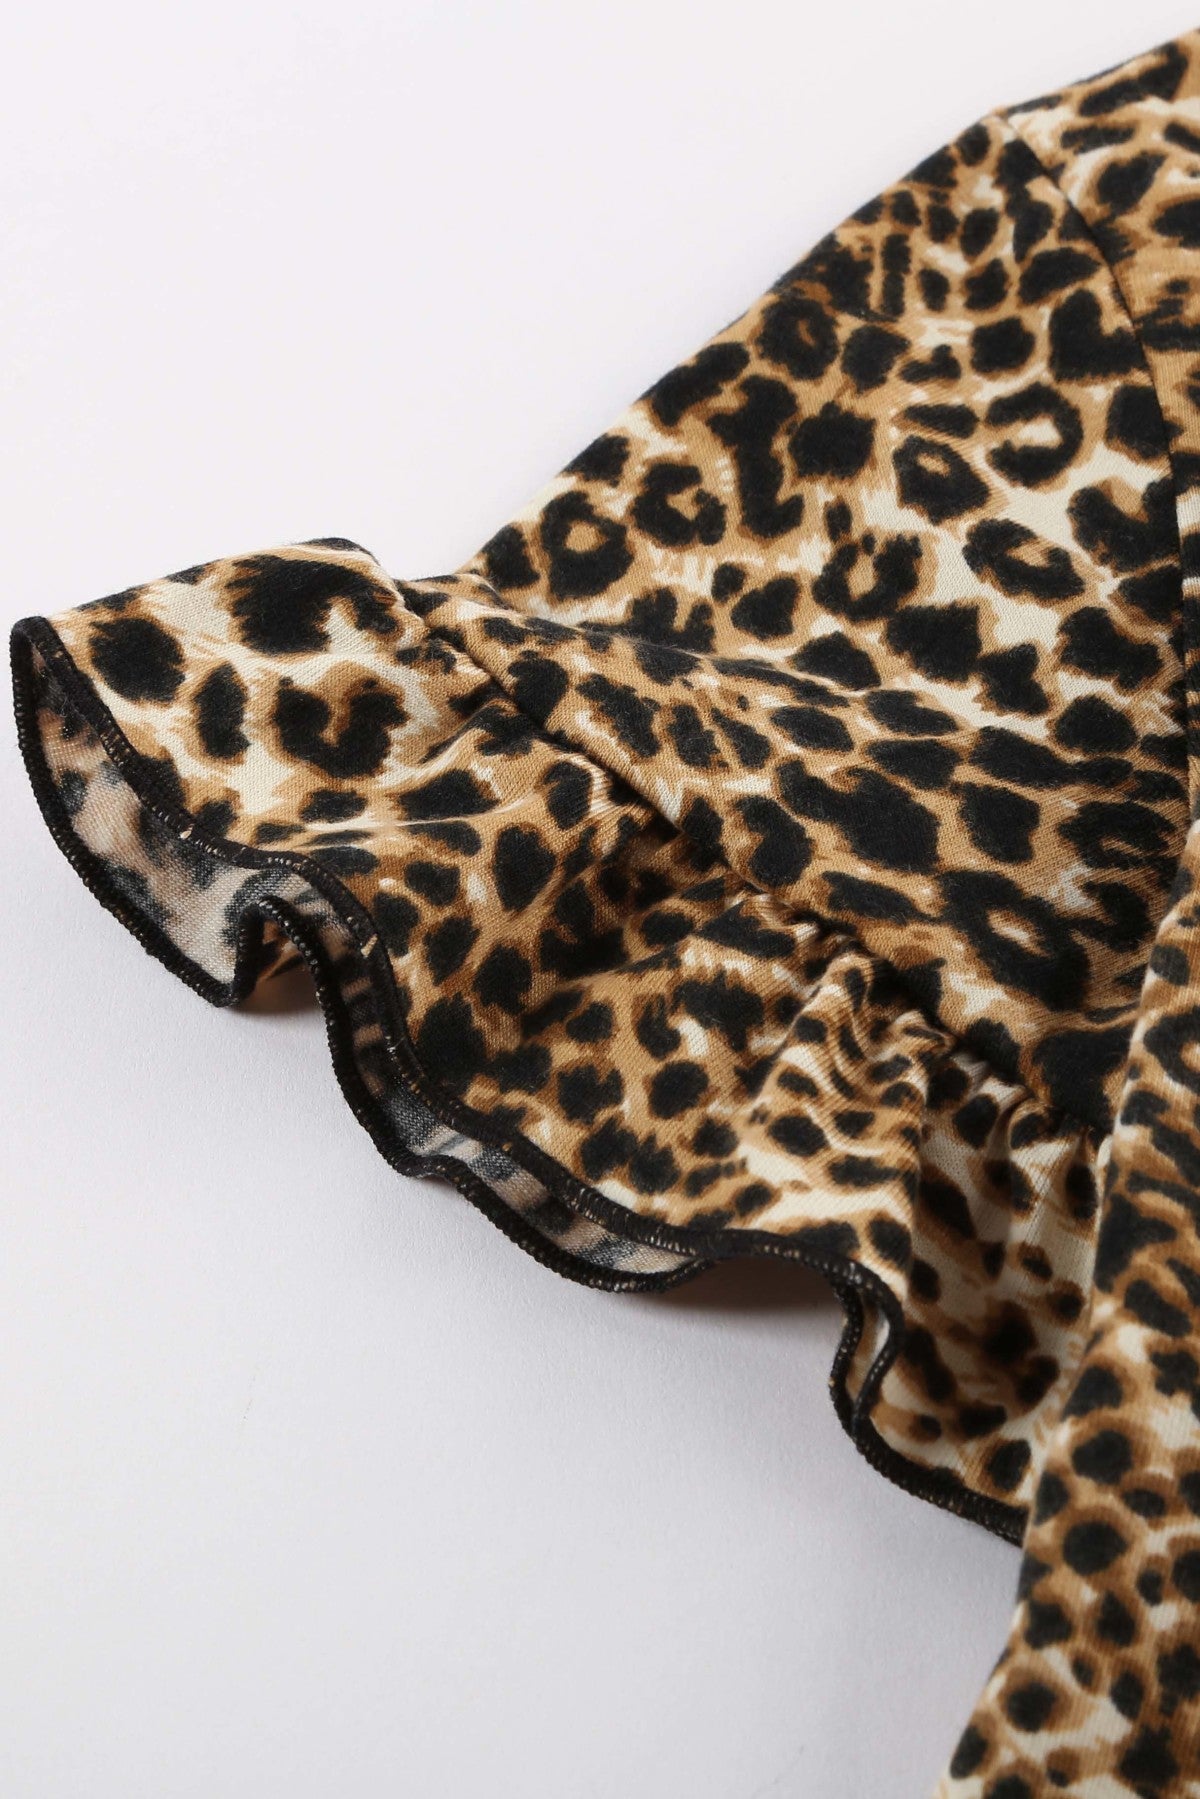 Ruffled Sleeves Leopard Girls' Tee